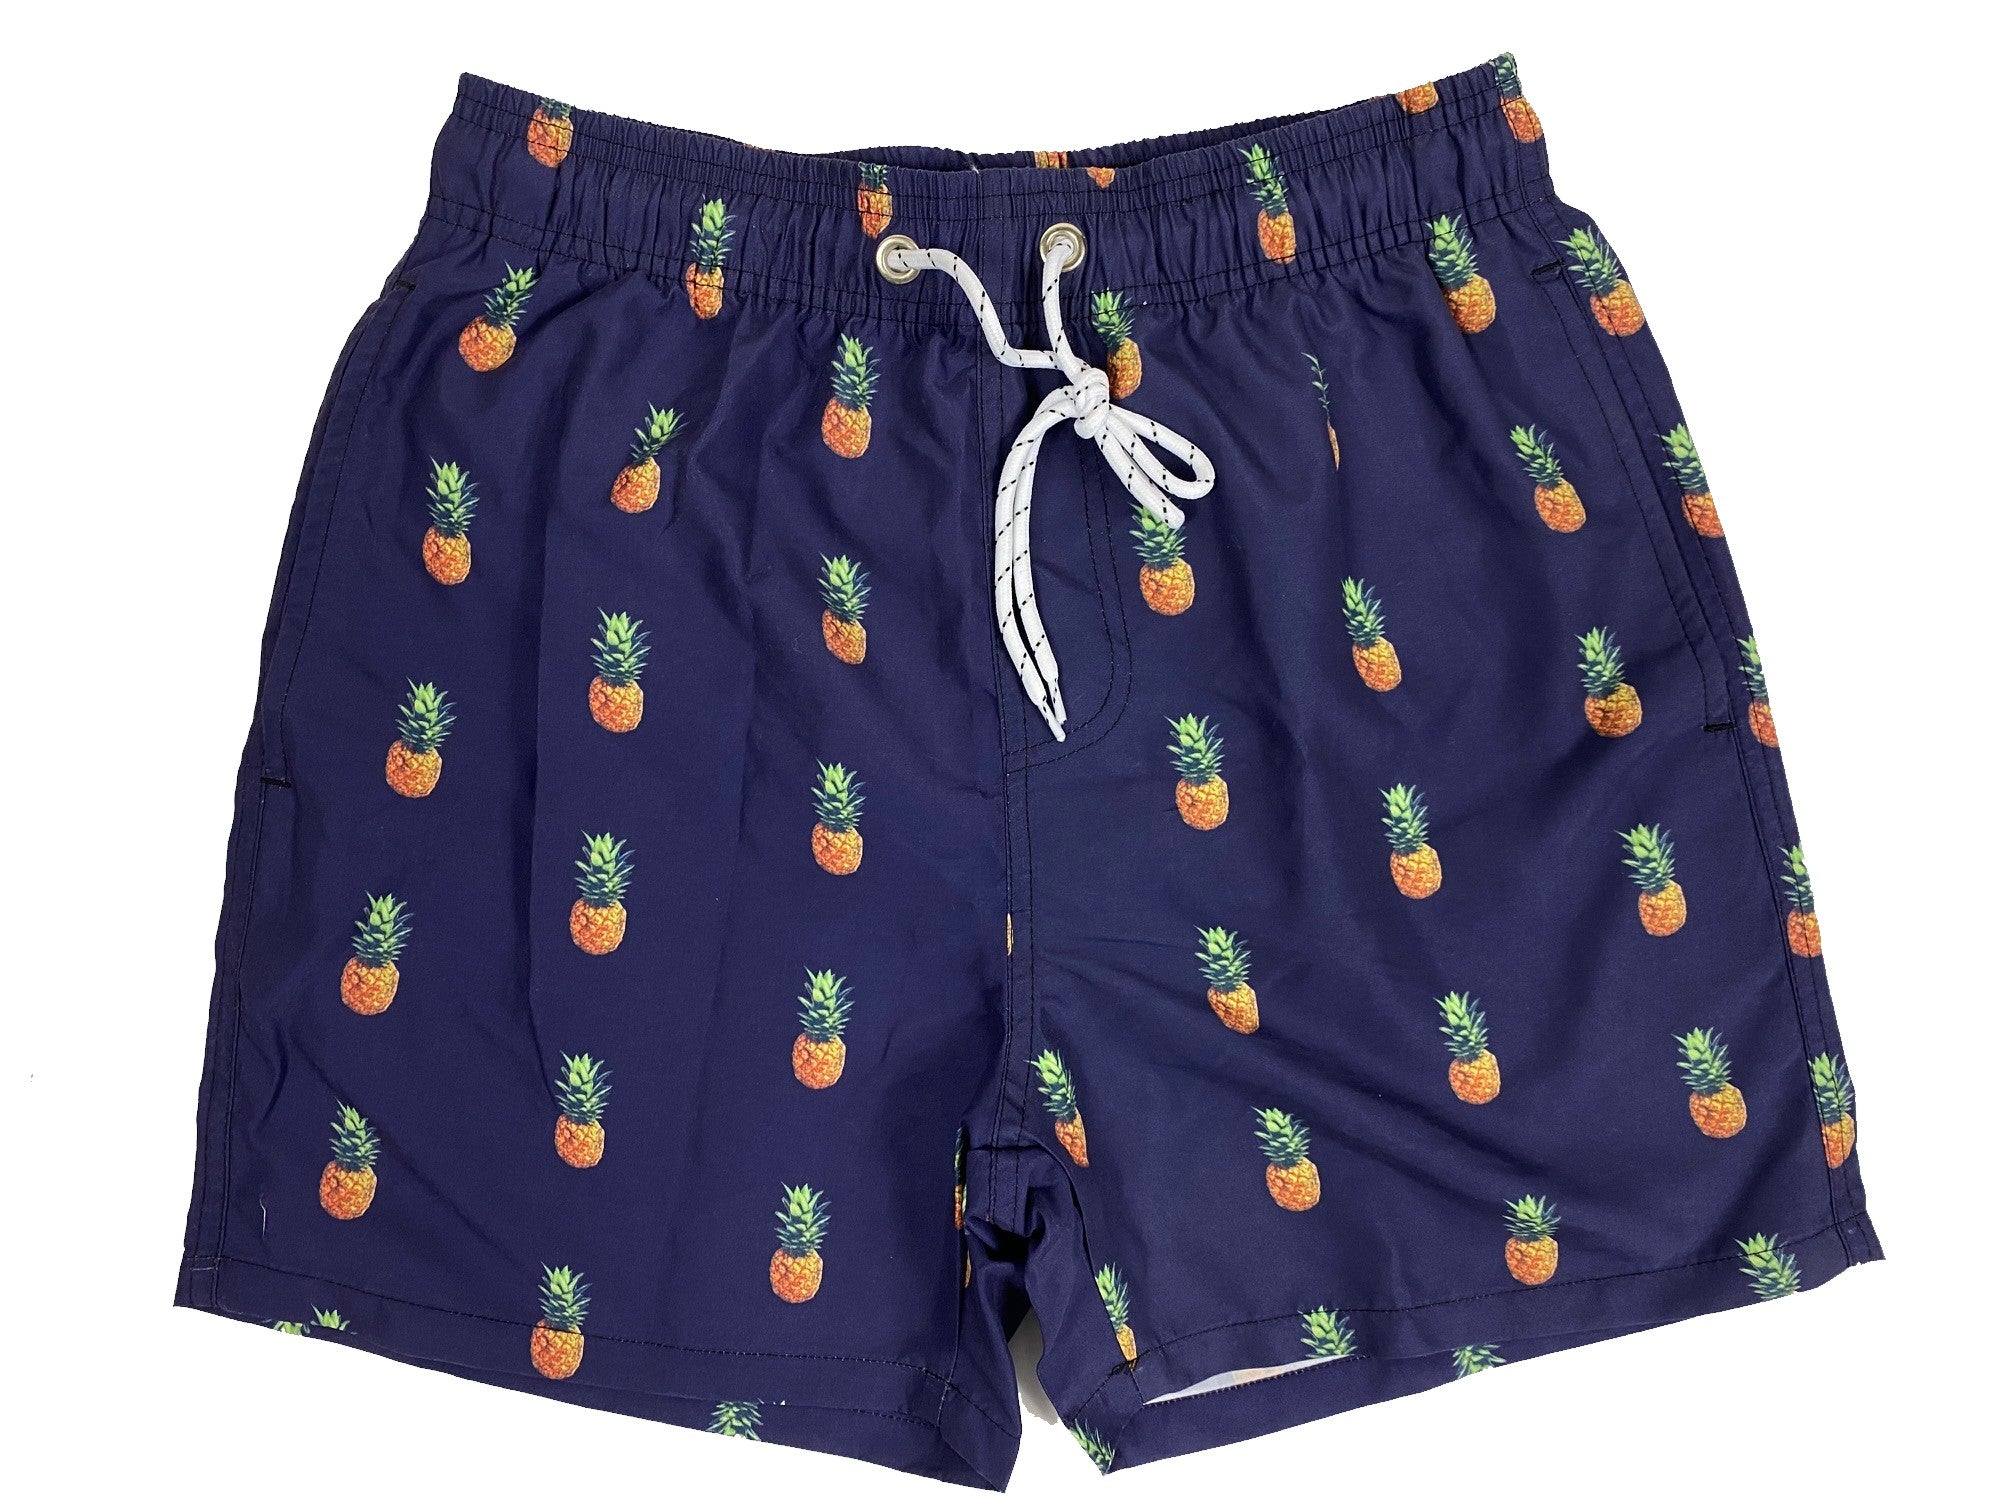 Tropical Pineapple Swim Trunks